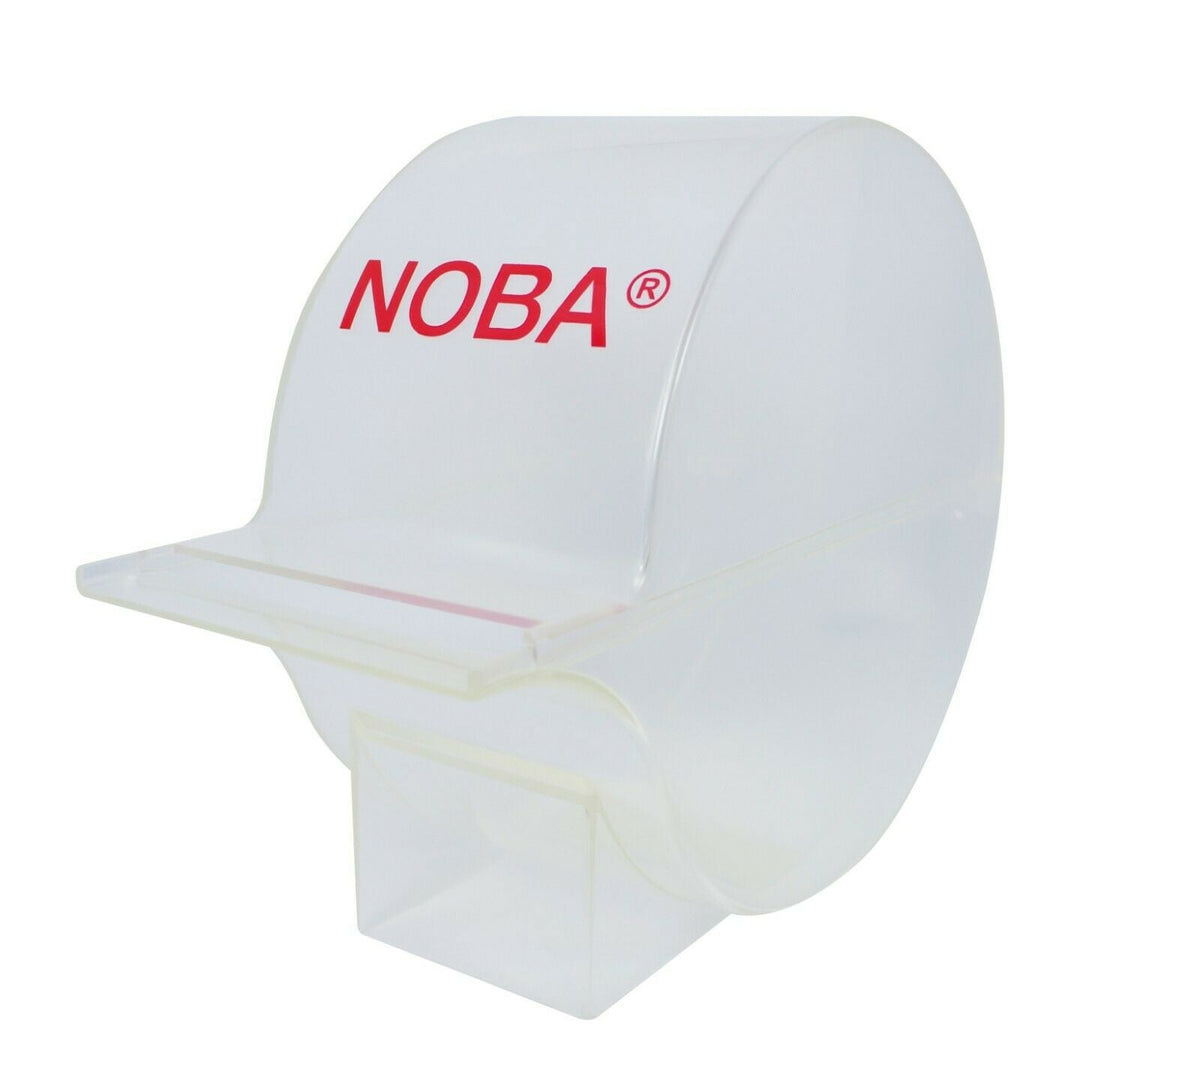 Noba Entnahmespender für Zellstofftupfer + 500 Stück Nobazelltupf steril 4 x 5 cm